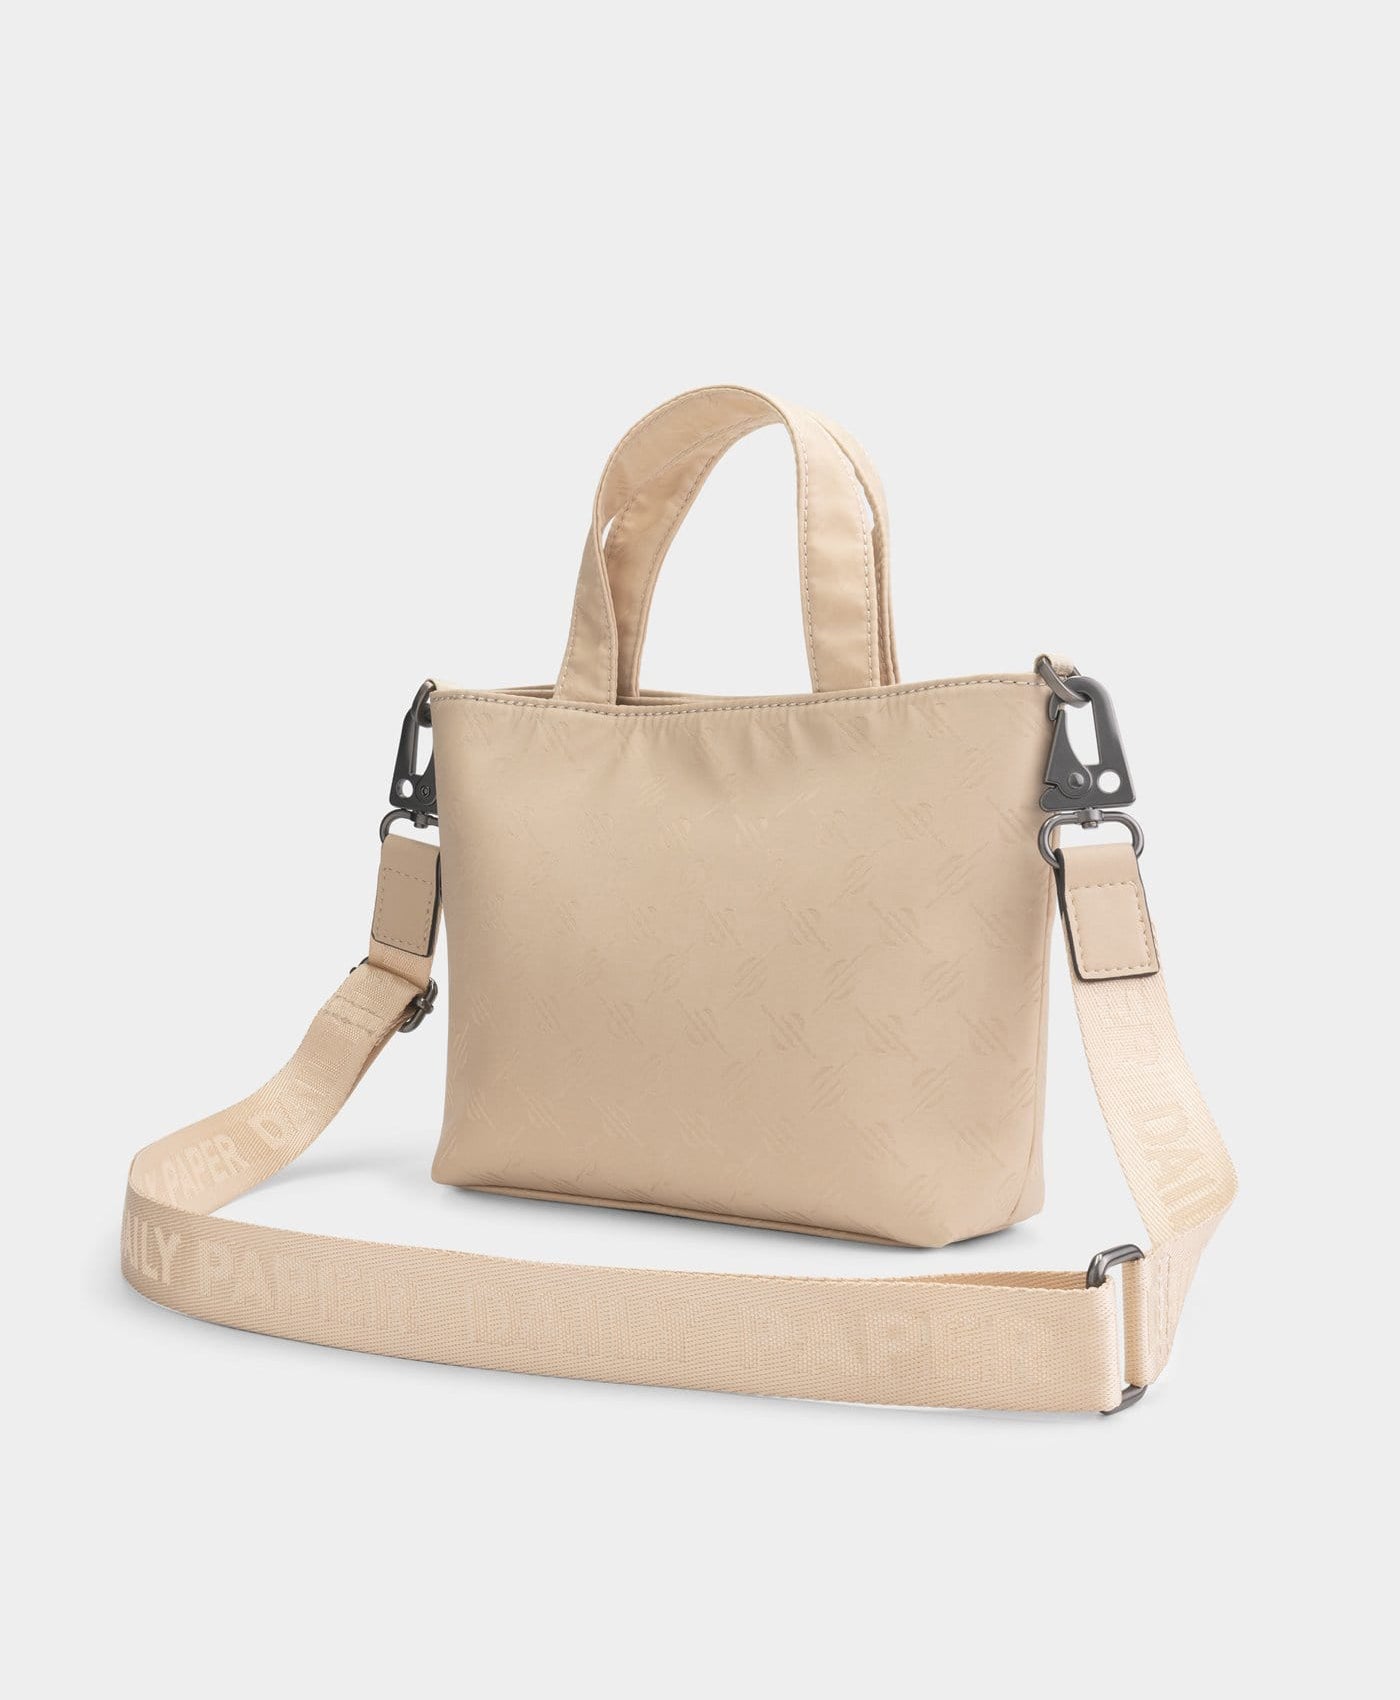 DP - Rosé Monogram Matiny Bag - Packshot - Rear